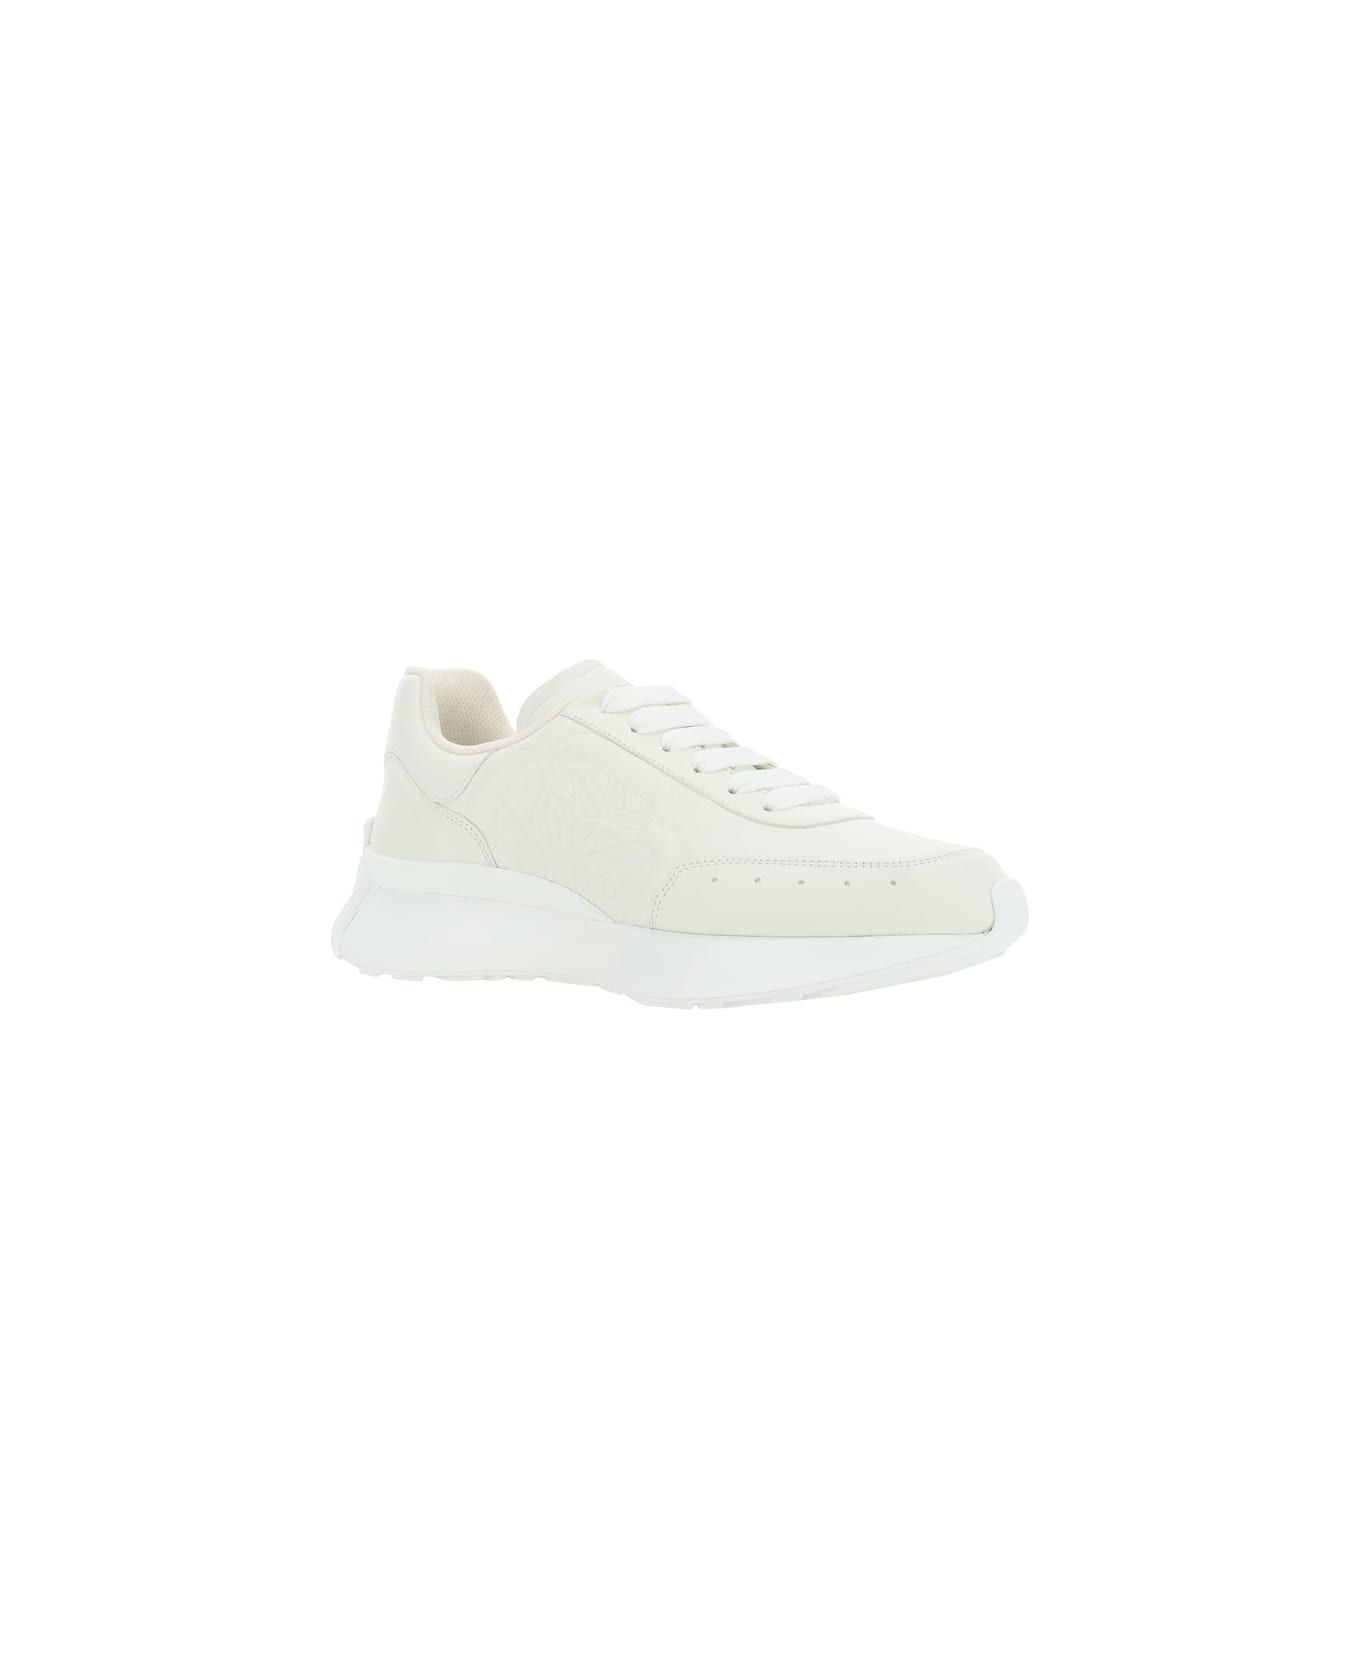 Alexander McQueen Sprint Runner Leather Sneakers - White/white